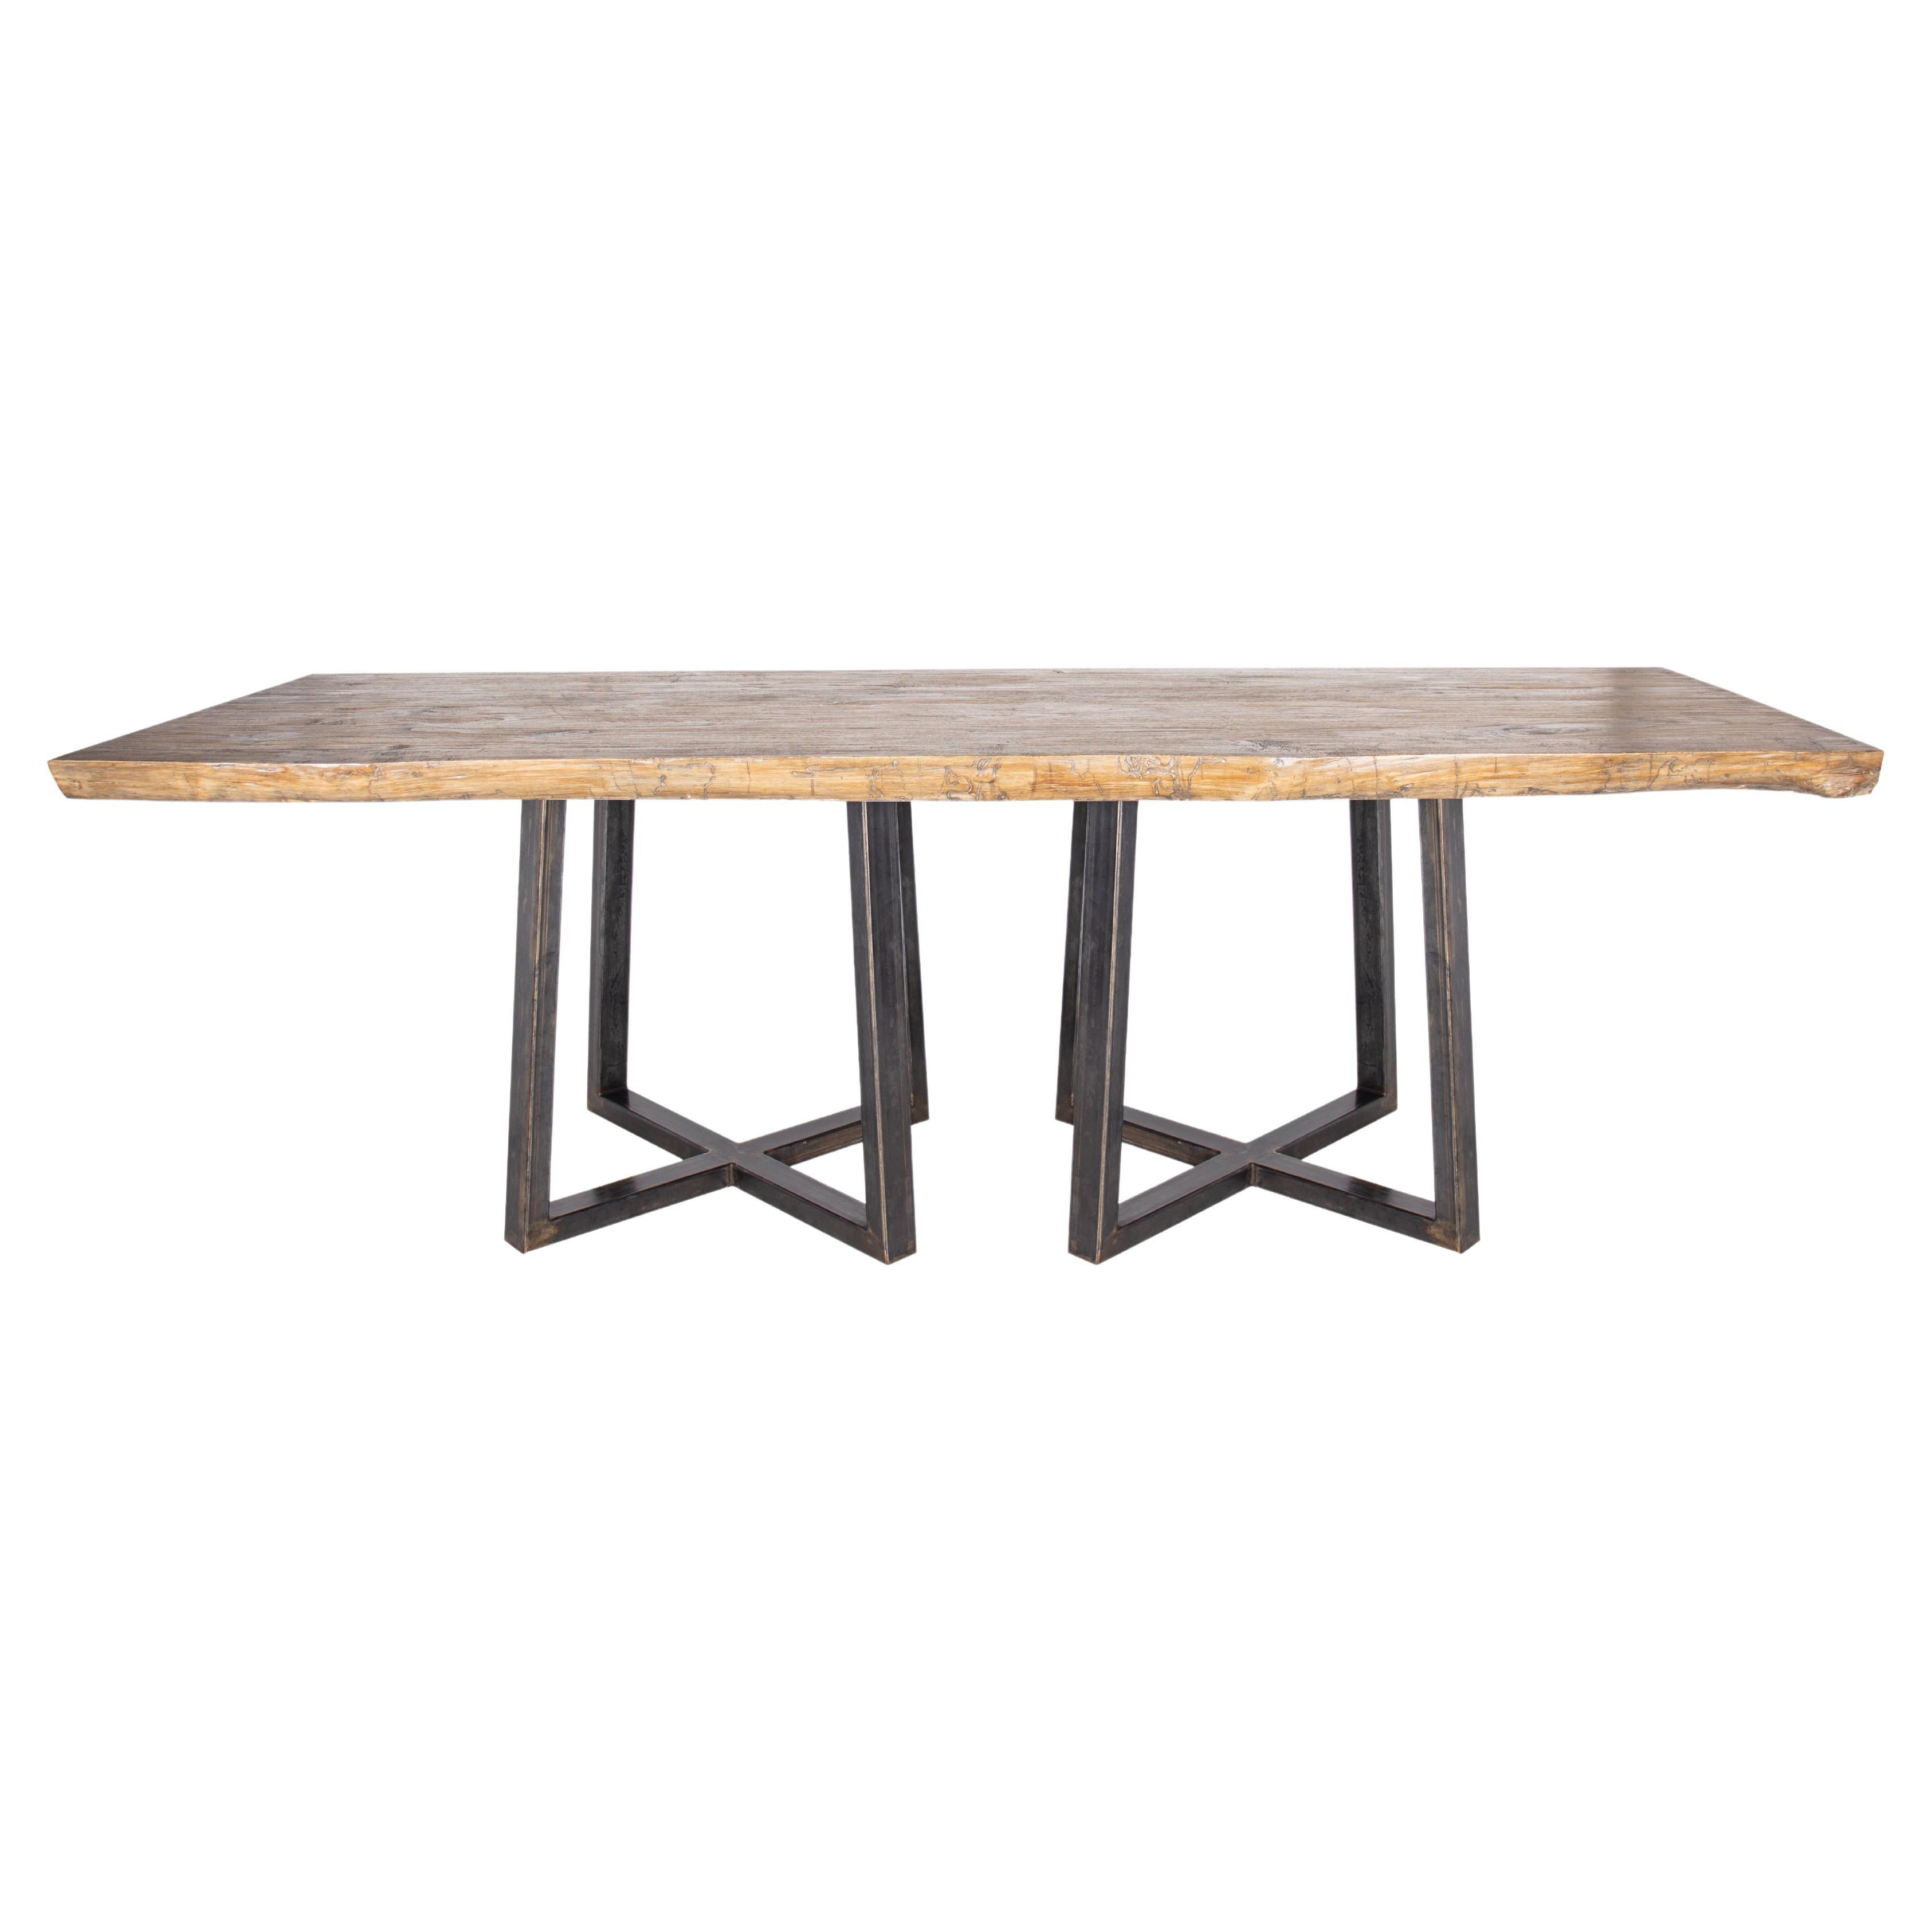 Cross Design Ebonized Patina Steel Base with Live Edge Wood Table Top